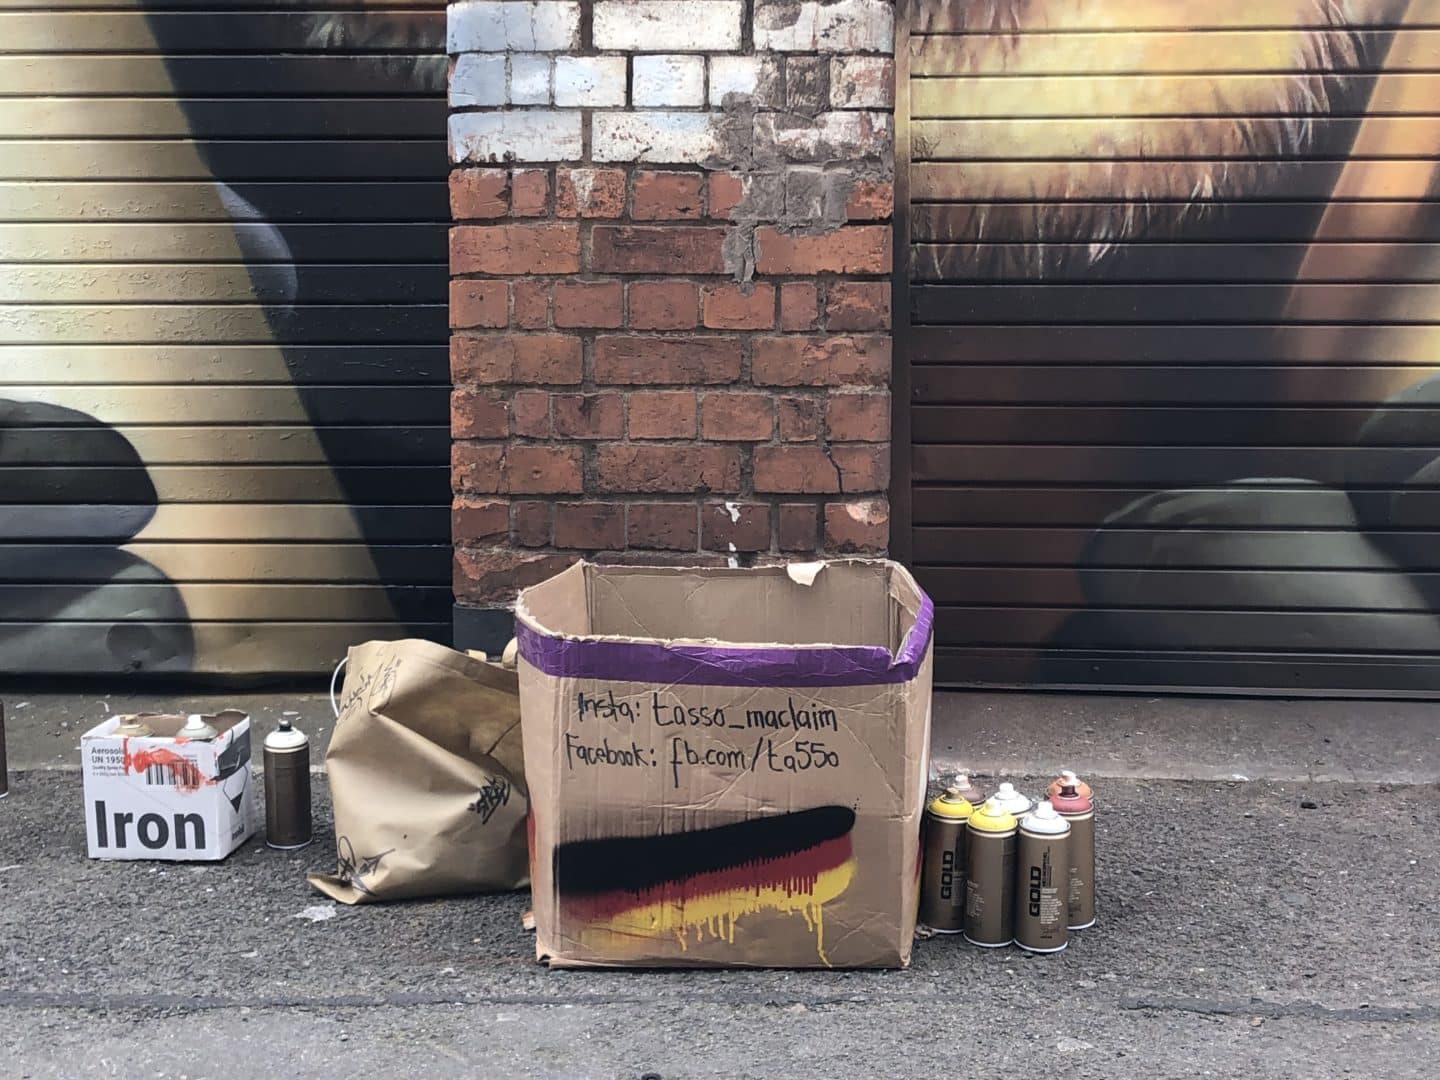 The urban street art scene transforming Leicester